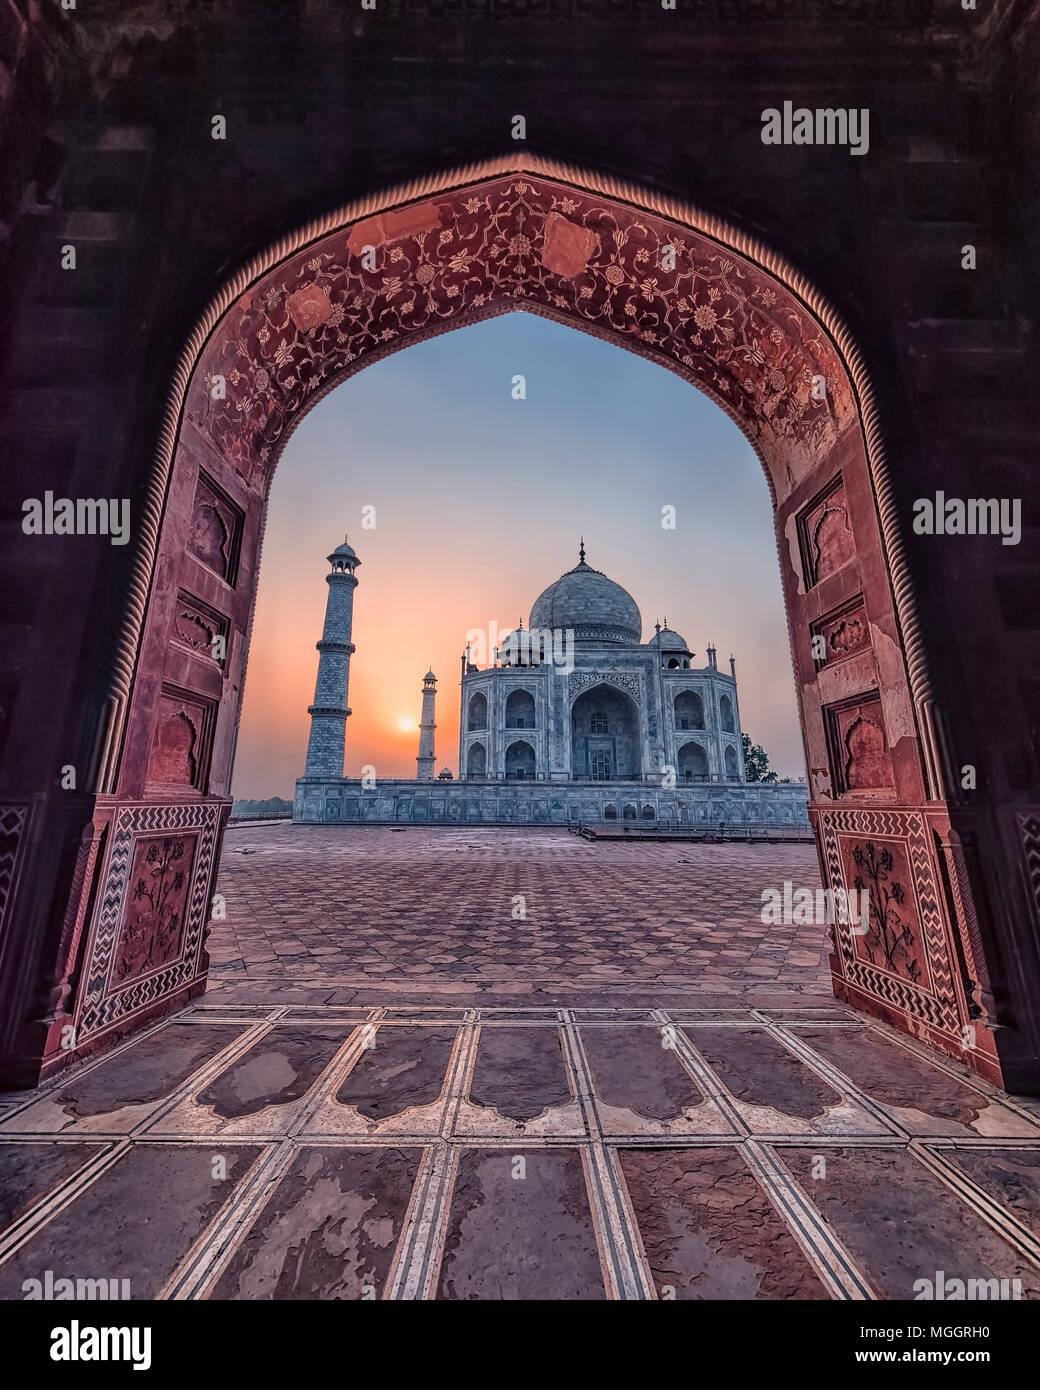 Taj Mahal in sunrise light, Agra, India Stock Photo